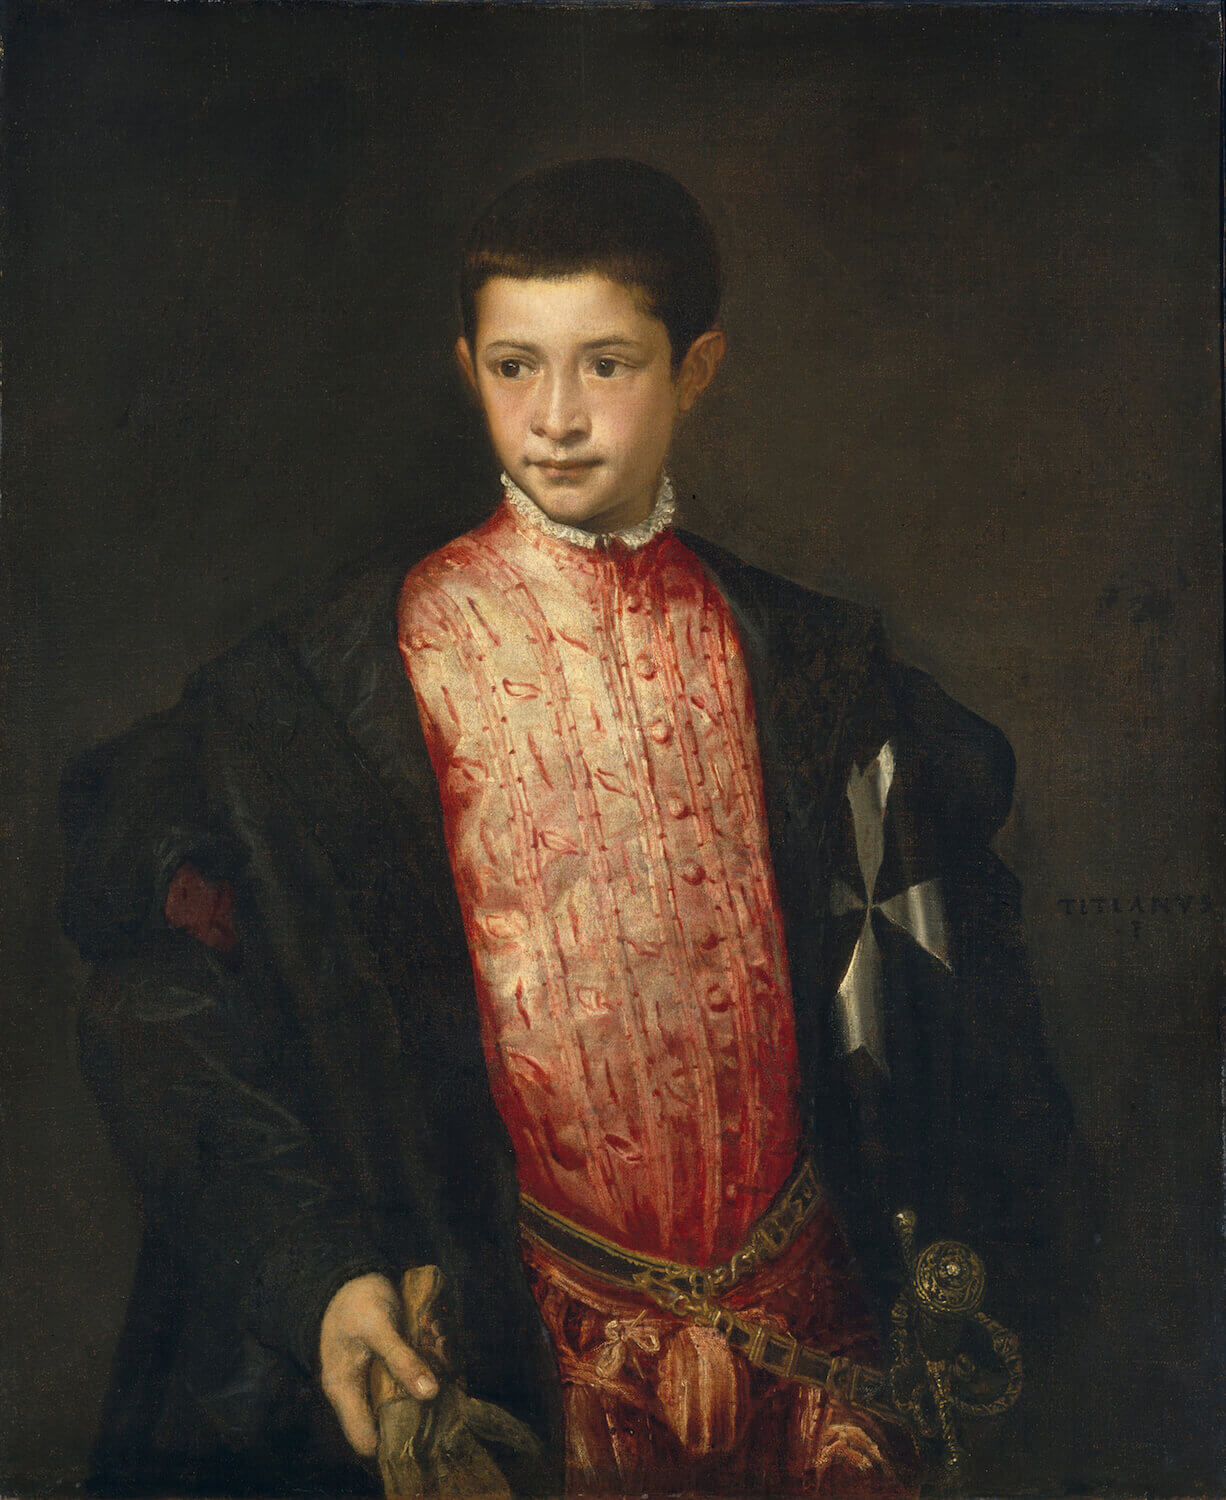 Titian, Portrait of Ranuccio Farnese, 1542 (National Gallery of Art, Washington DC)